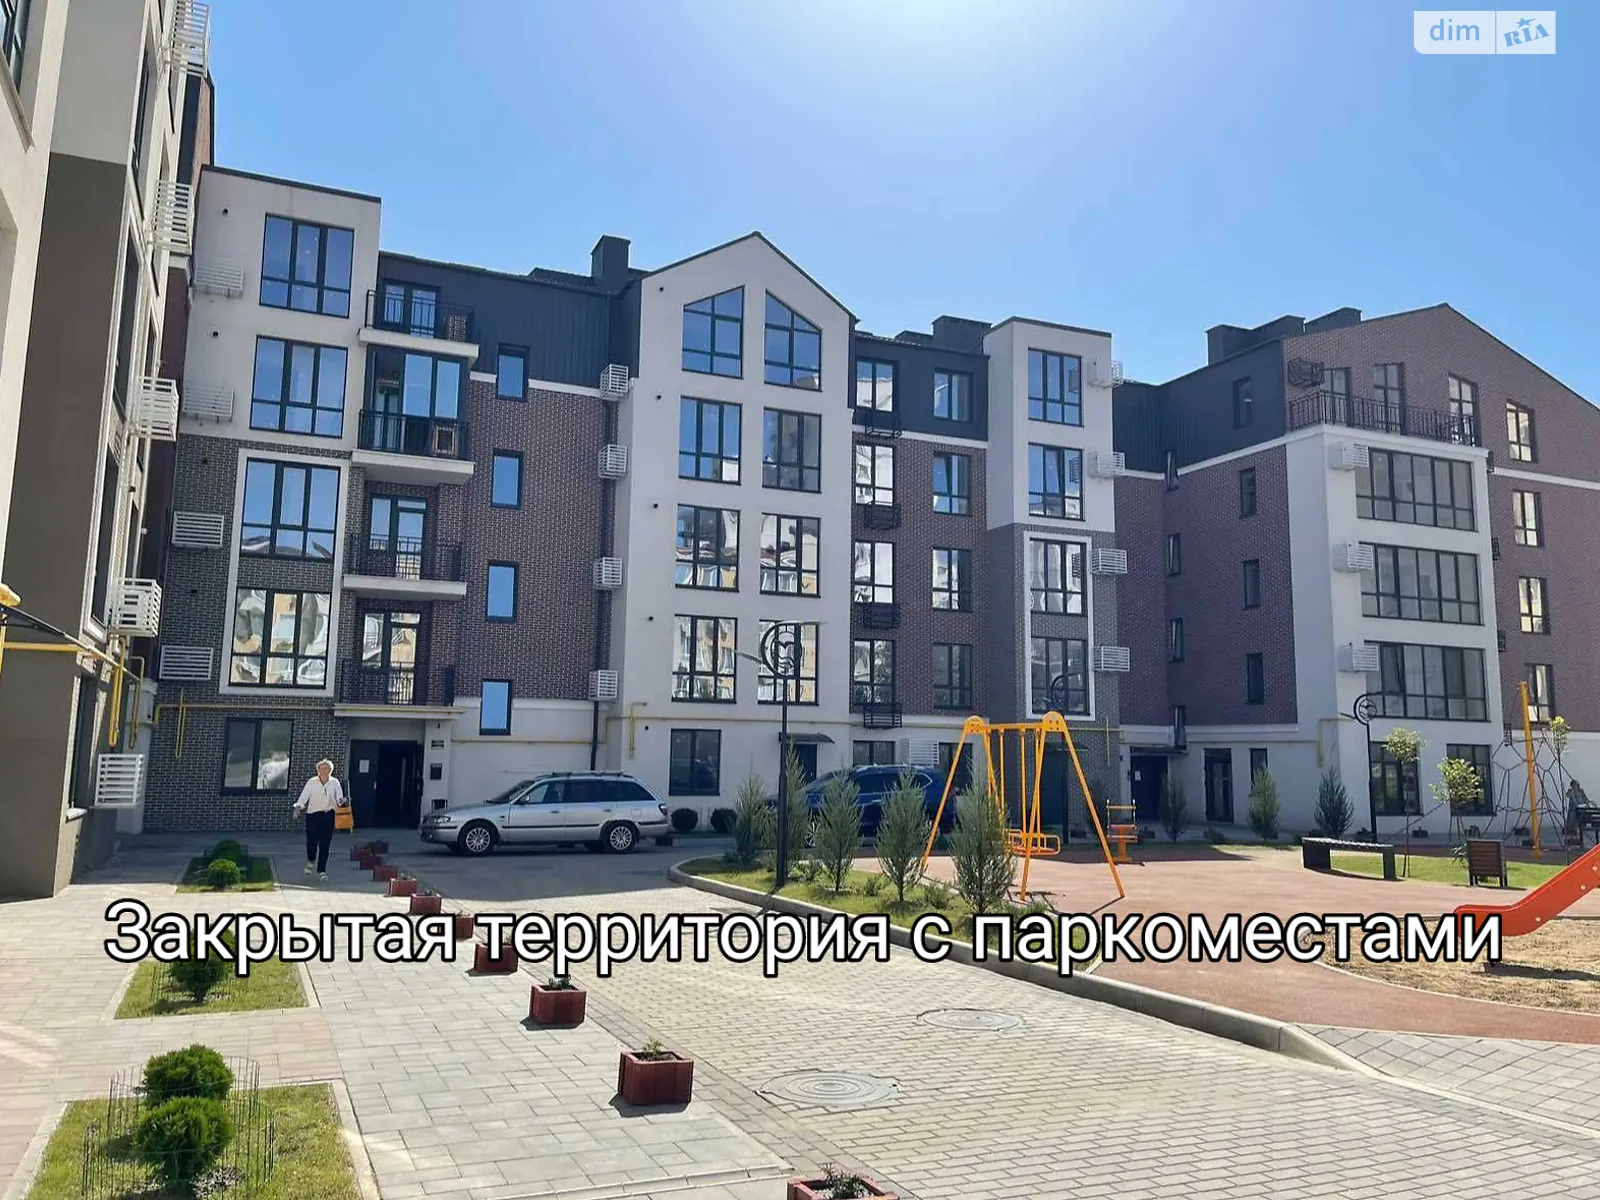 Продается 1-комнатная квартира 49.9 кв. м в Одессе, ул. Академика Сахарова - фото 1